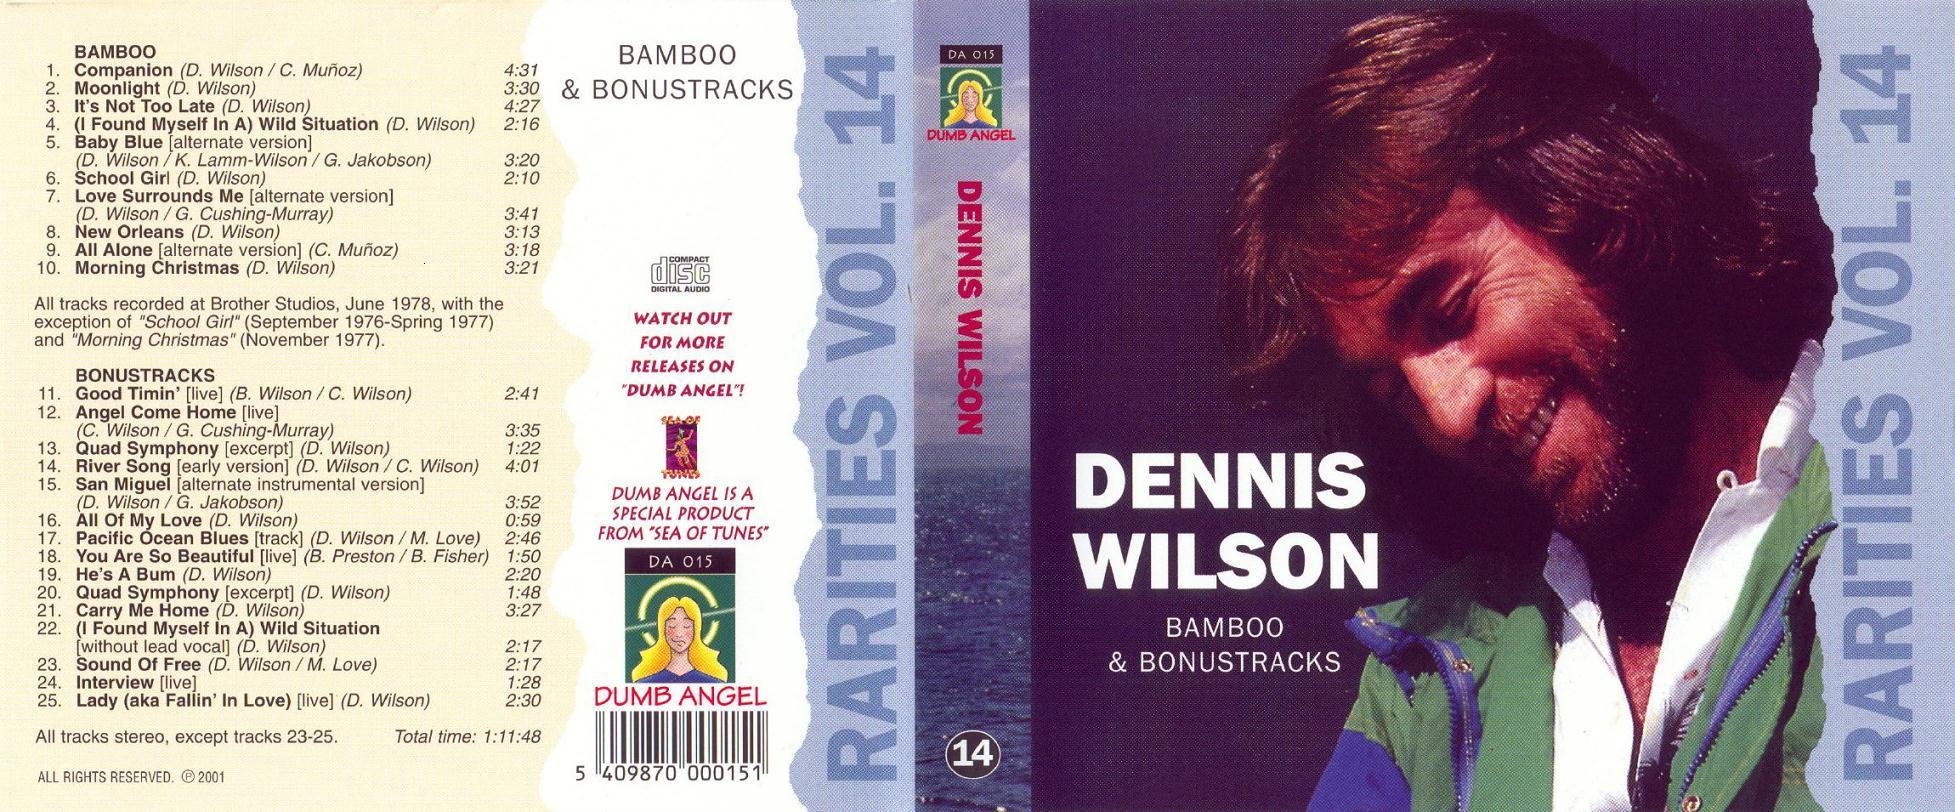 wilson_dennis-bamboo-front